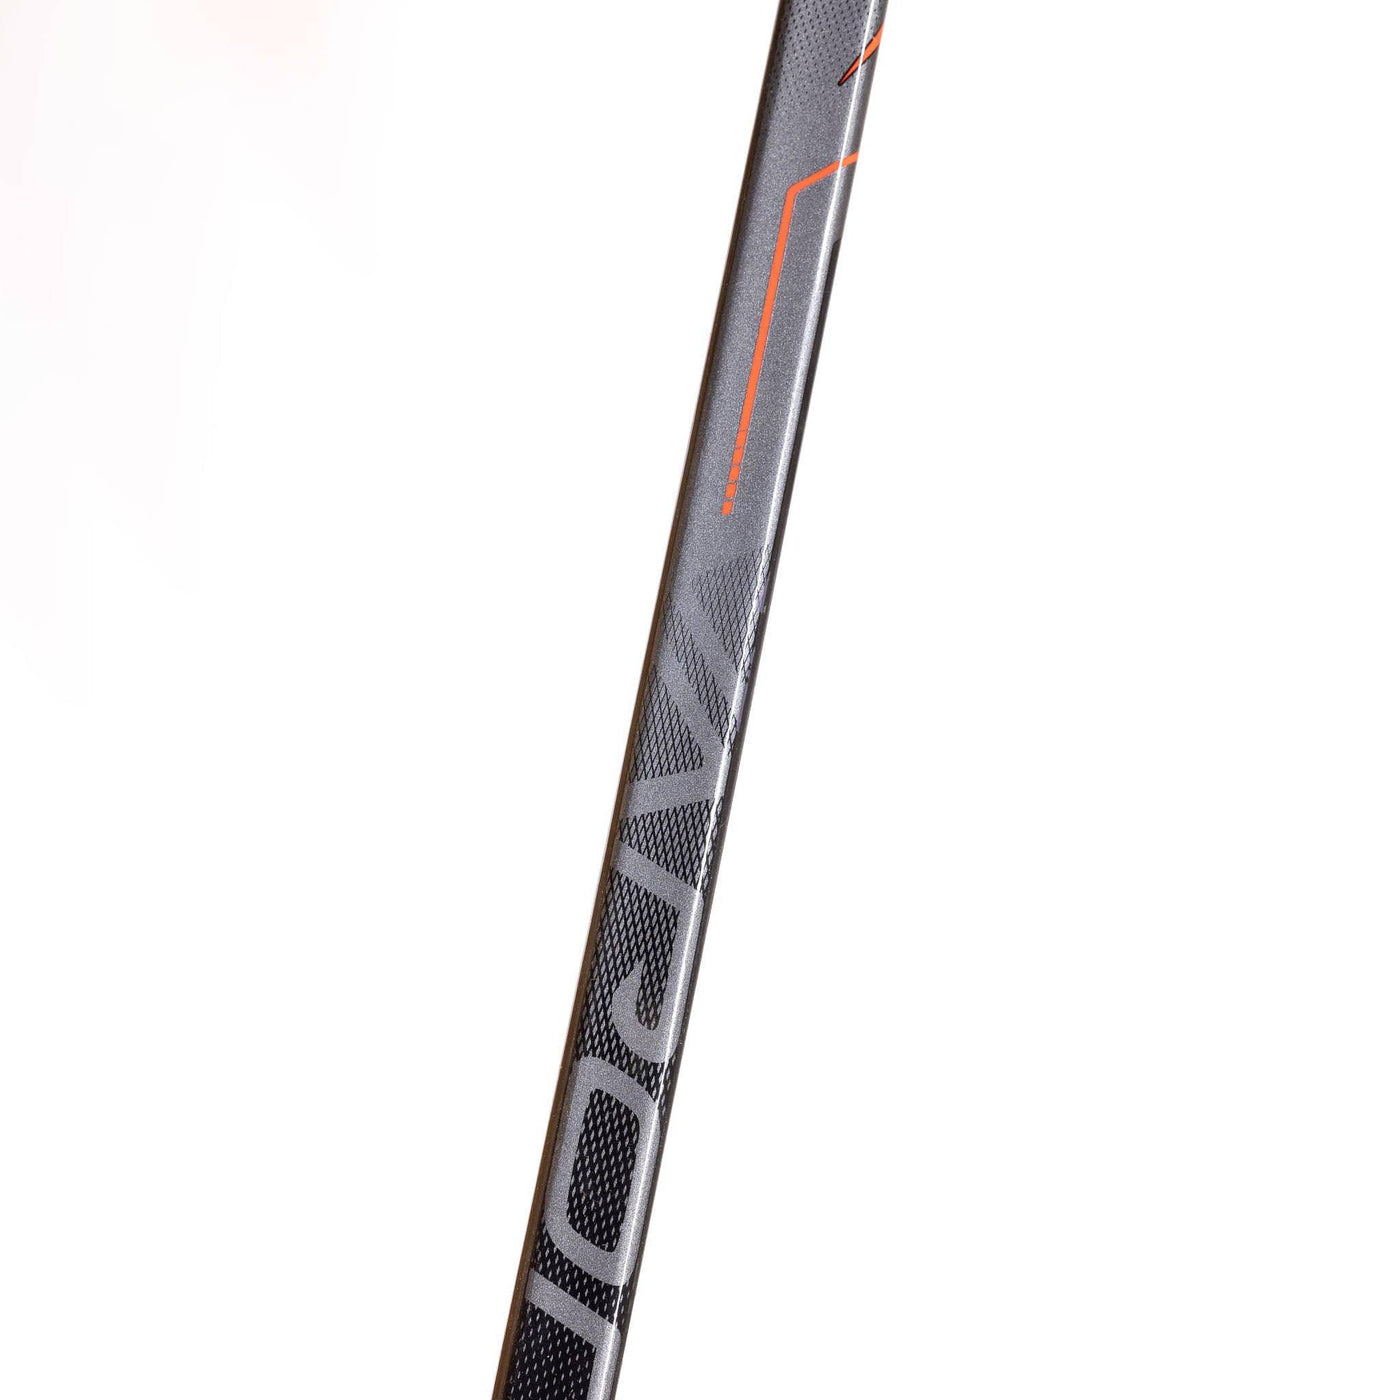 Bauer Vapor 3X Pro Intermediate Hockey Stick